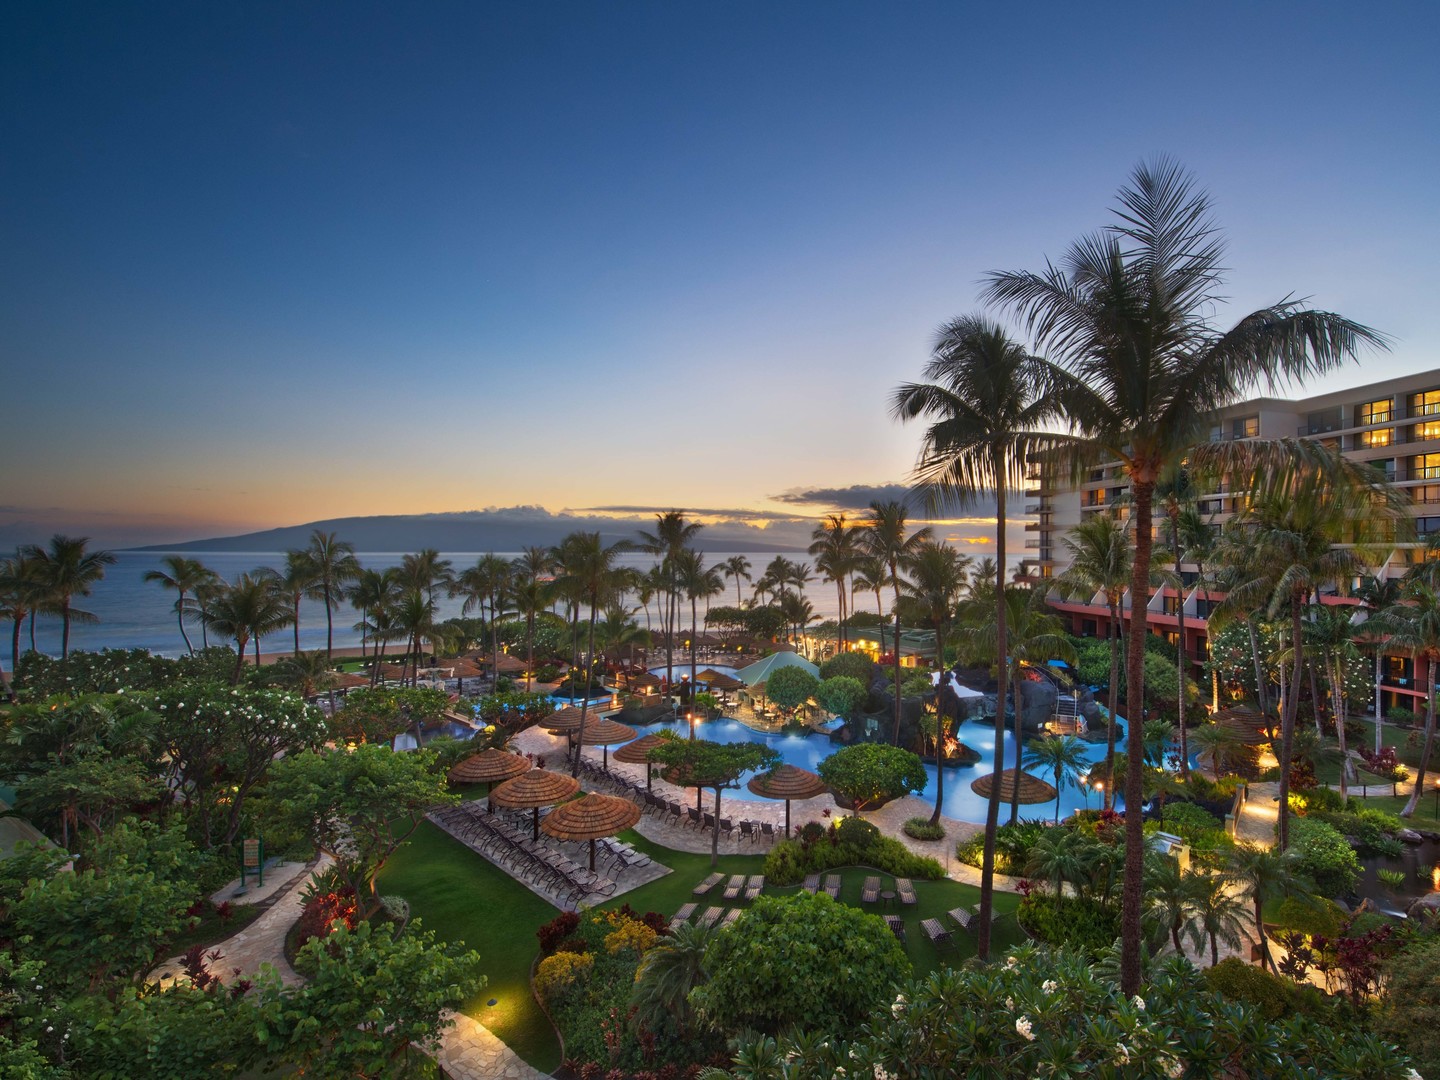 Marriott's Maui Ocean Club - Molokai, Maui, and Lanai Towers Aerial View Super Pool. Marriott's Maui Ocean Club - Molokai, Maui, and Lanai Towers is located in Lāhainā, Maui, Hawai‘i United States.